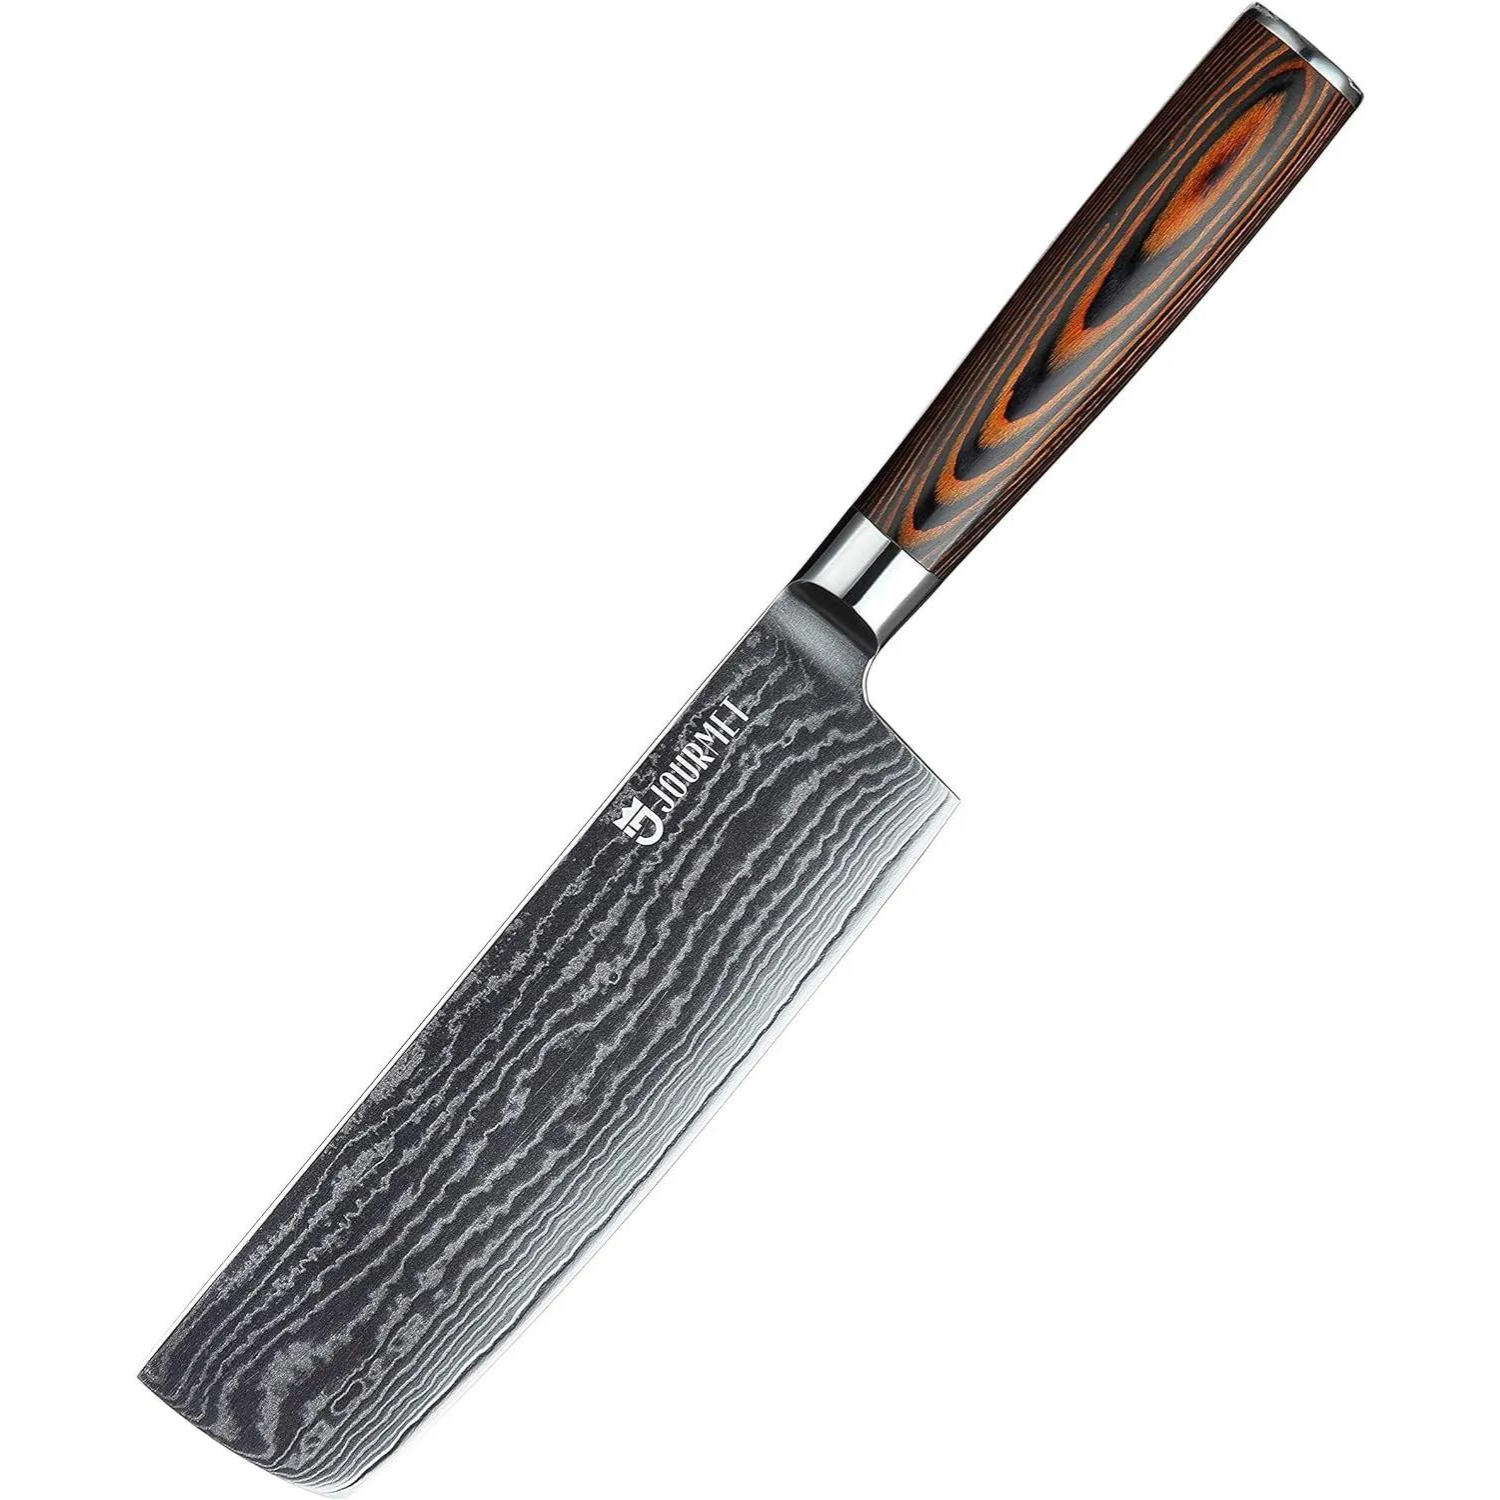 Jourmet 7-inch Damascus Nakiri Knife on a white background, highlighting its sleek design and multi-functional blade.